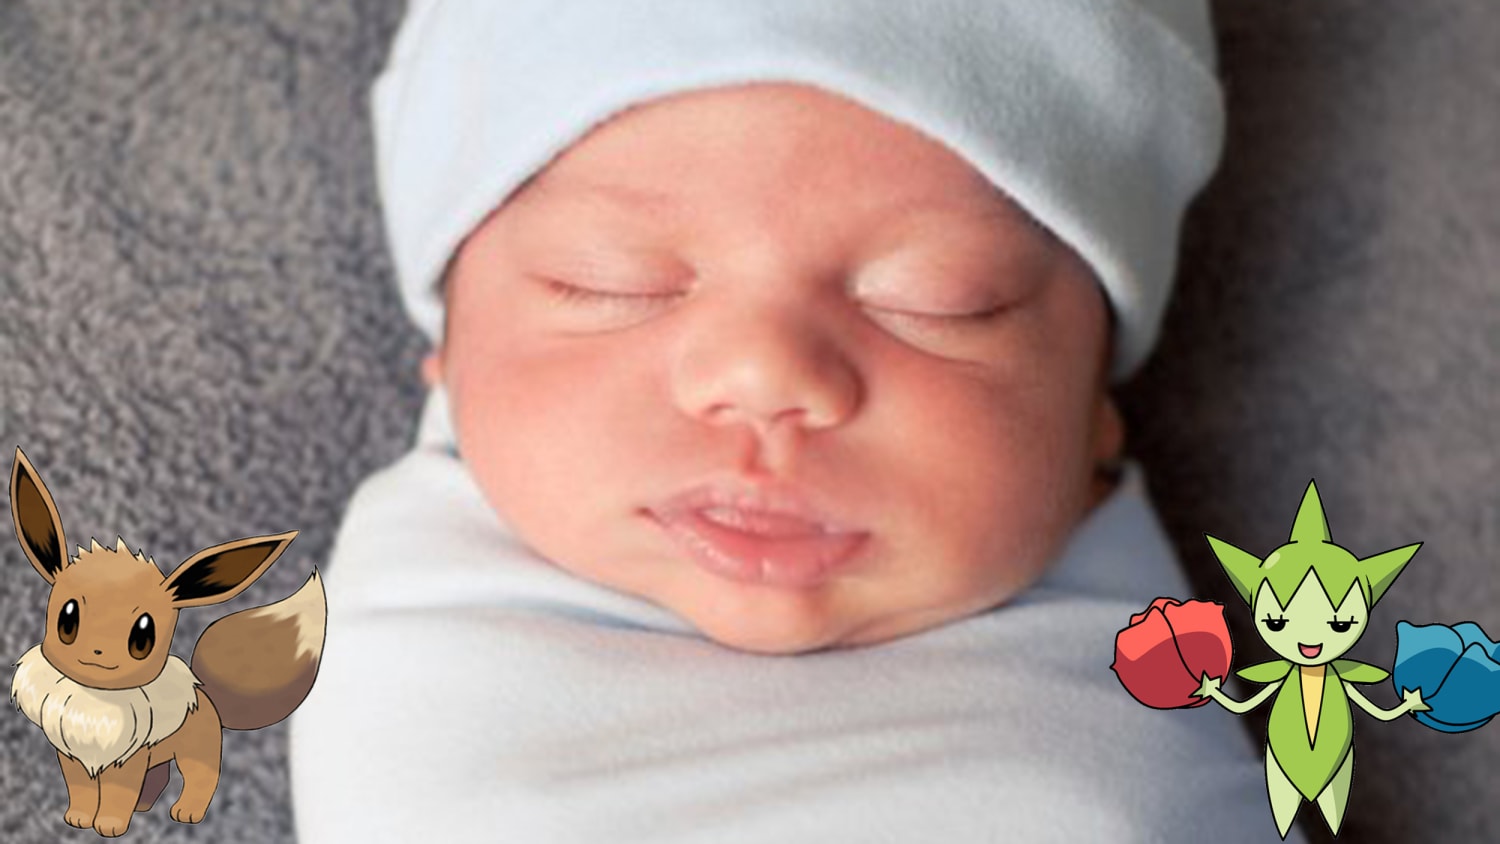 Pokemon Go inspiring baby names, BabyCenter reports